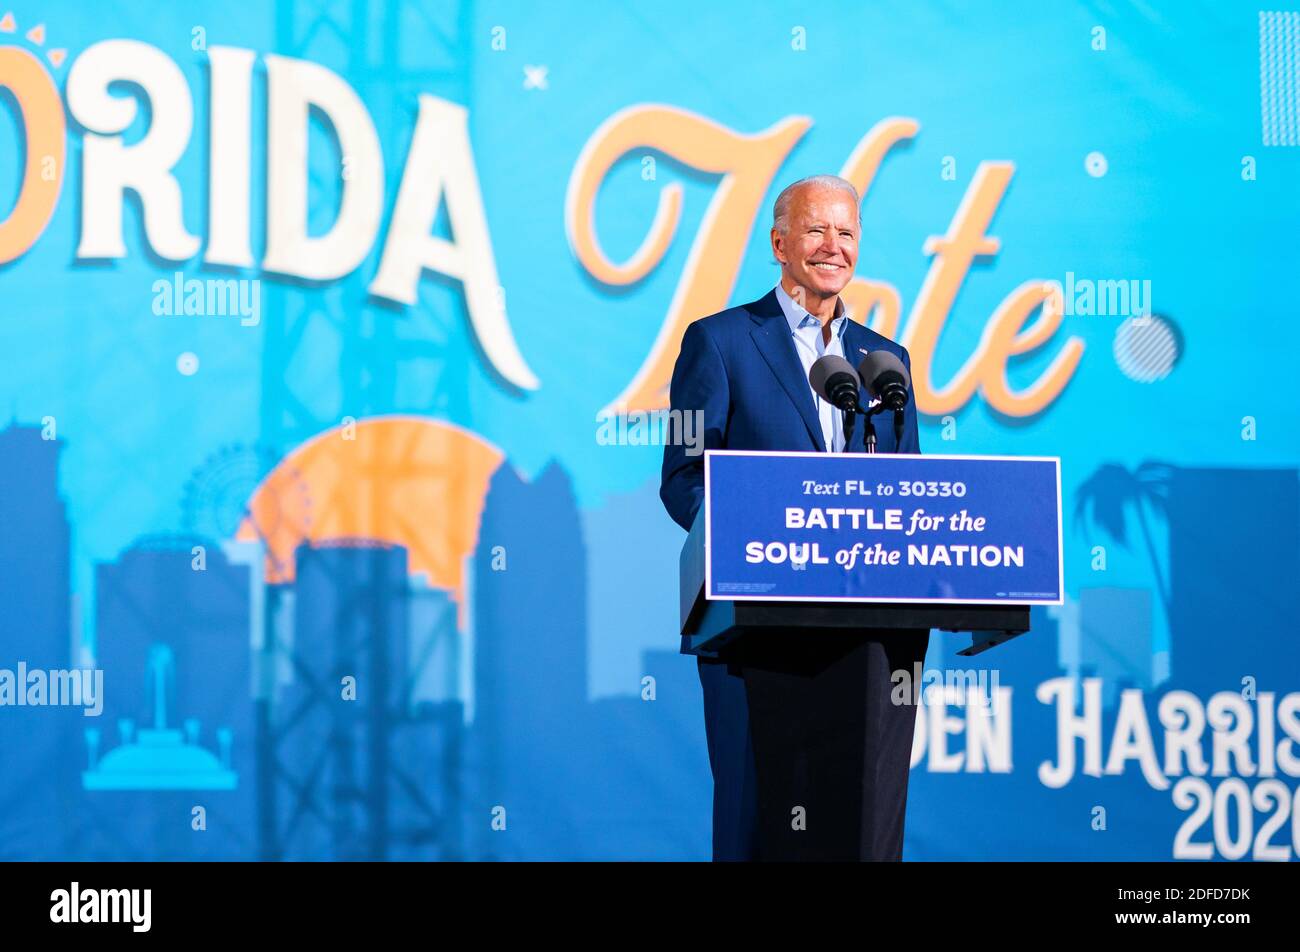 TAMPA, FL, USA - 29 October 2020 - US democratic president Joe Biden at a Drive-In Rally at Florida State Fairgrounds - Tampa, FL - October 29, 2020 - Stock Photo